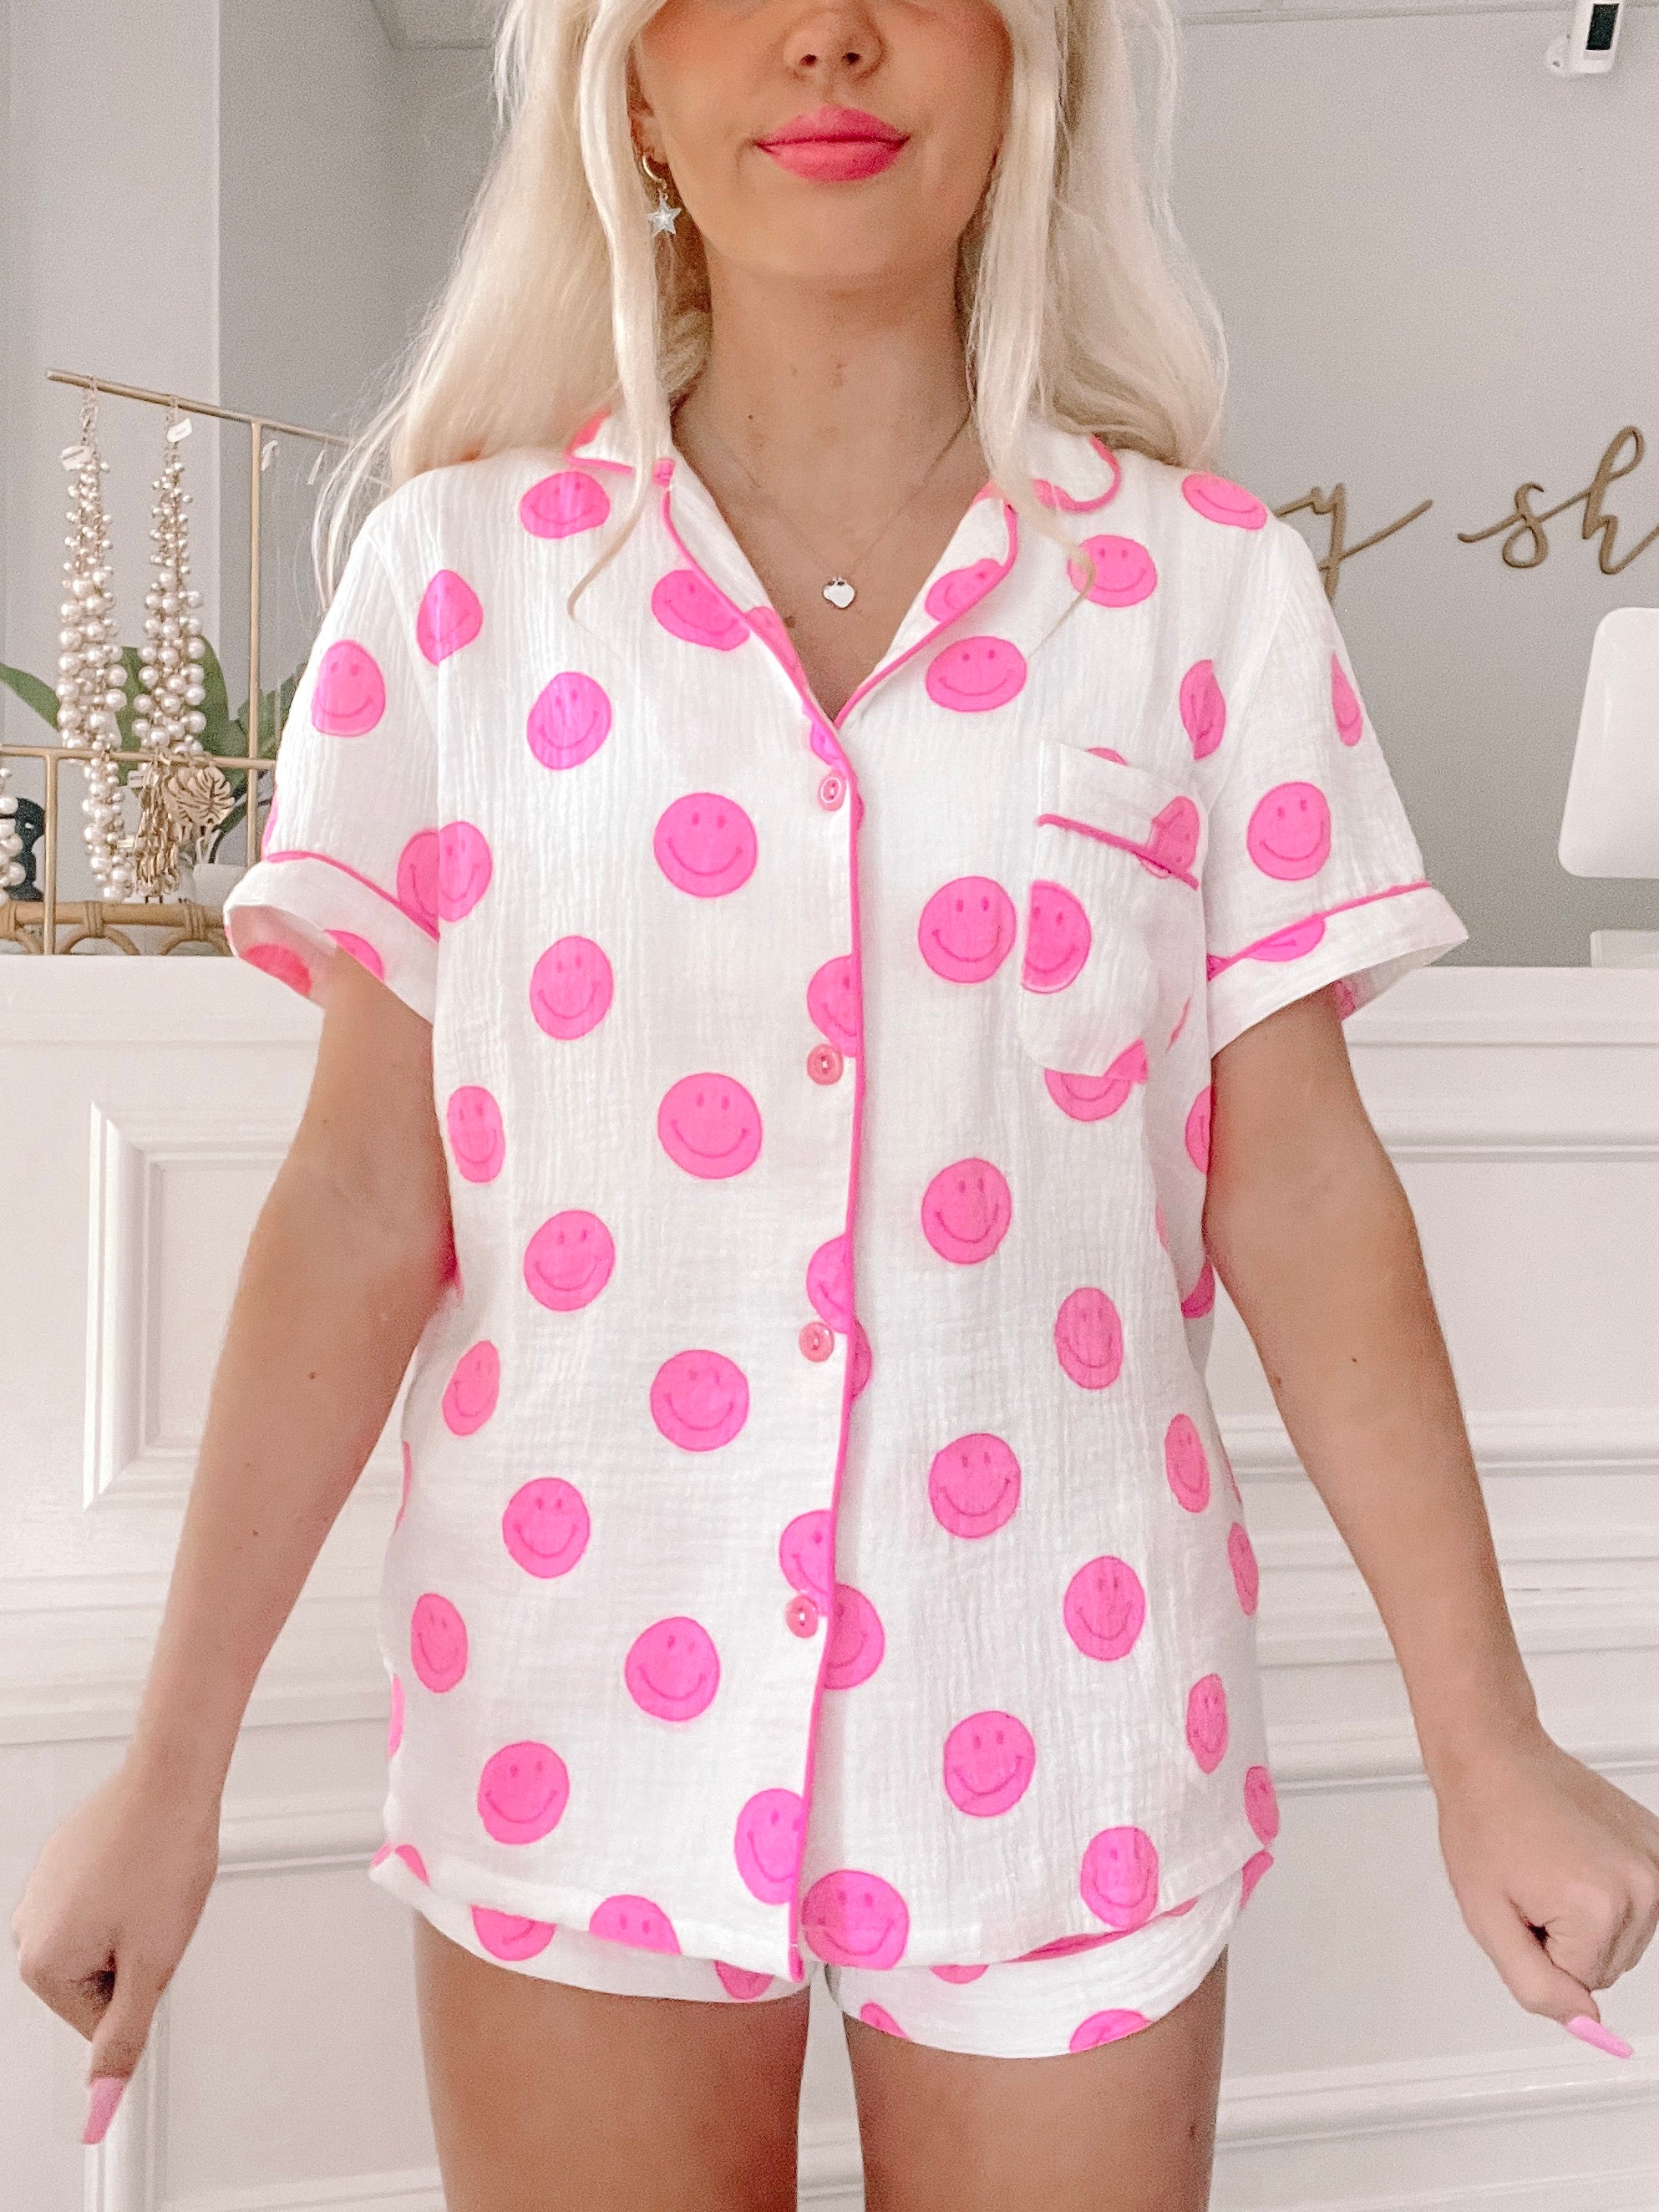 Smiley Dreams Pink Preppy Pajama Set | Sassy Shortcake | sassyshortcake.com